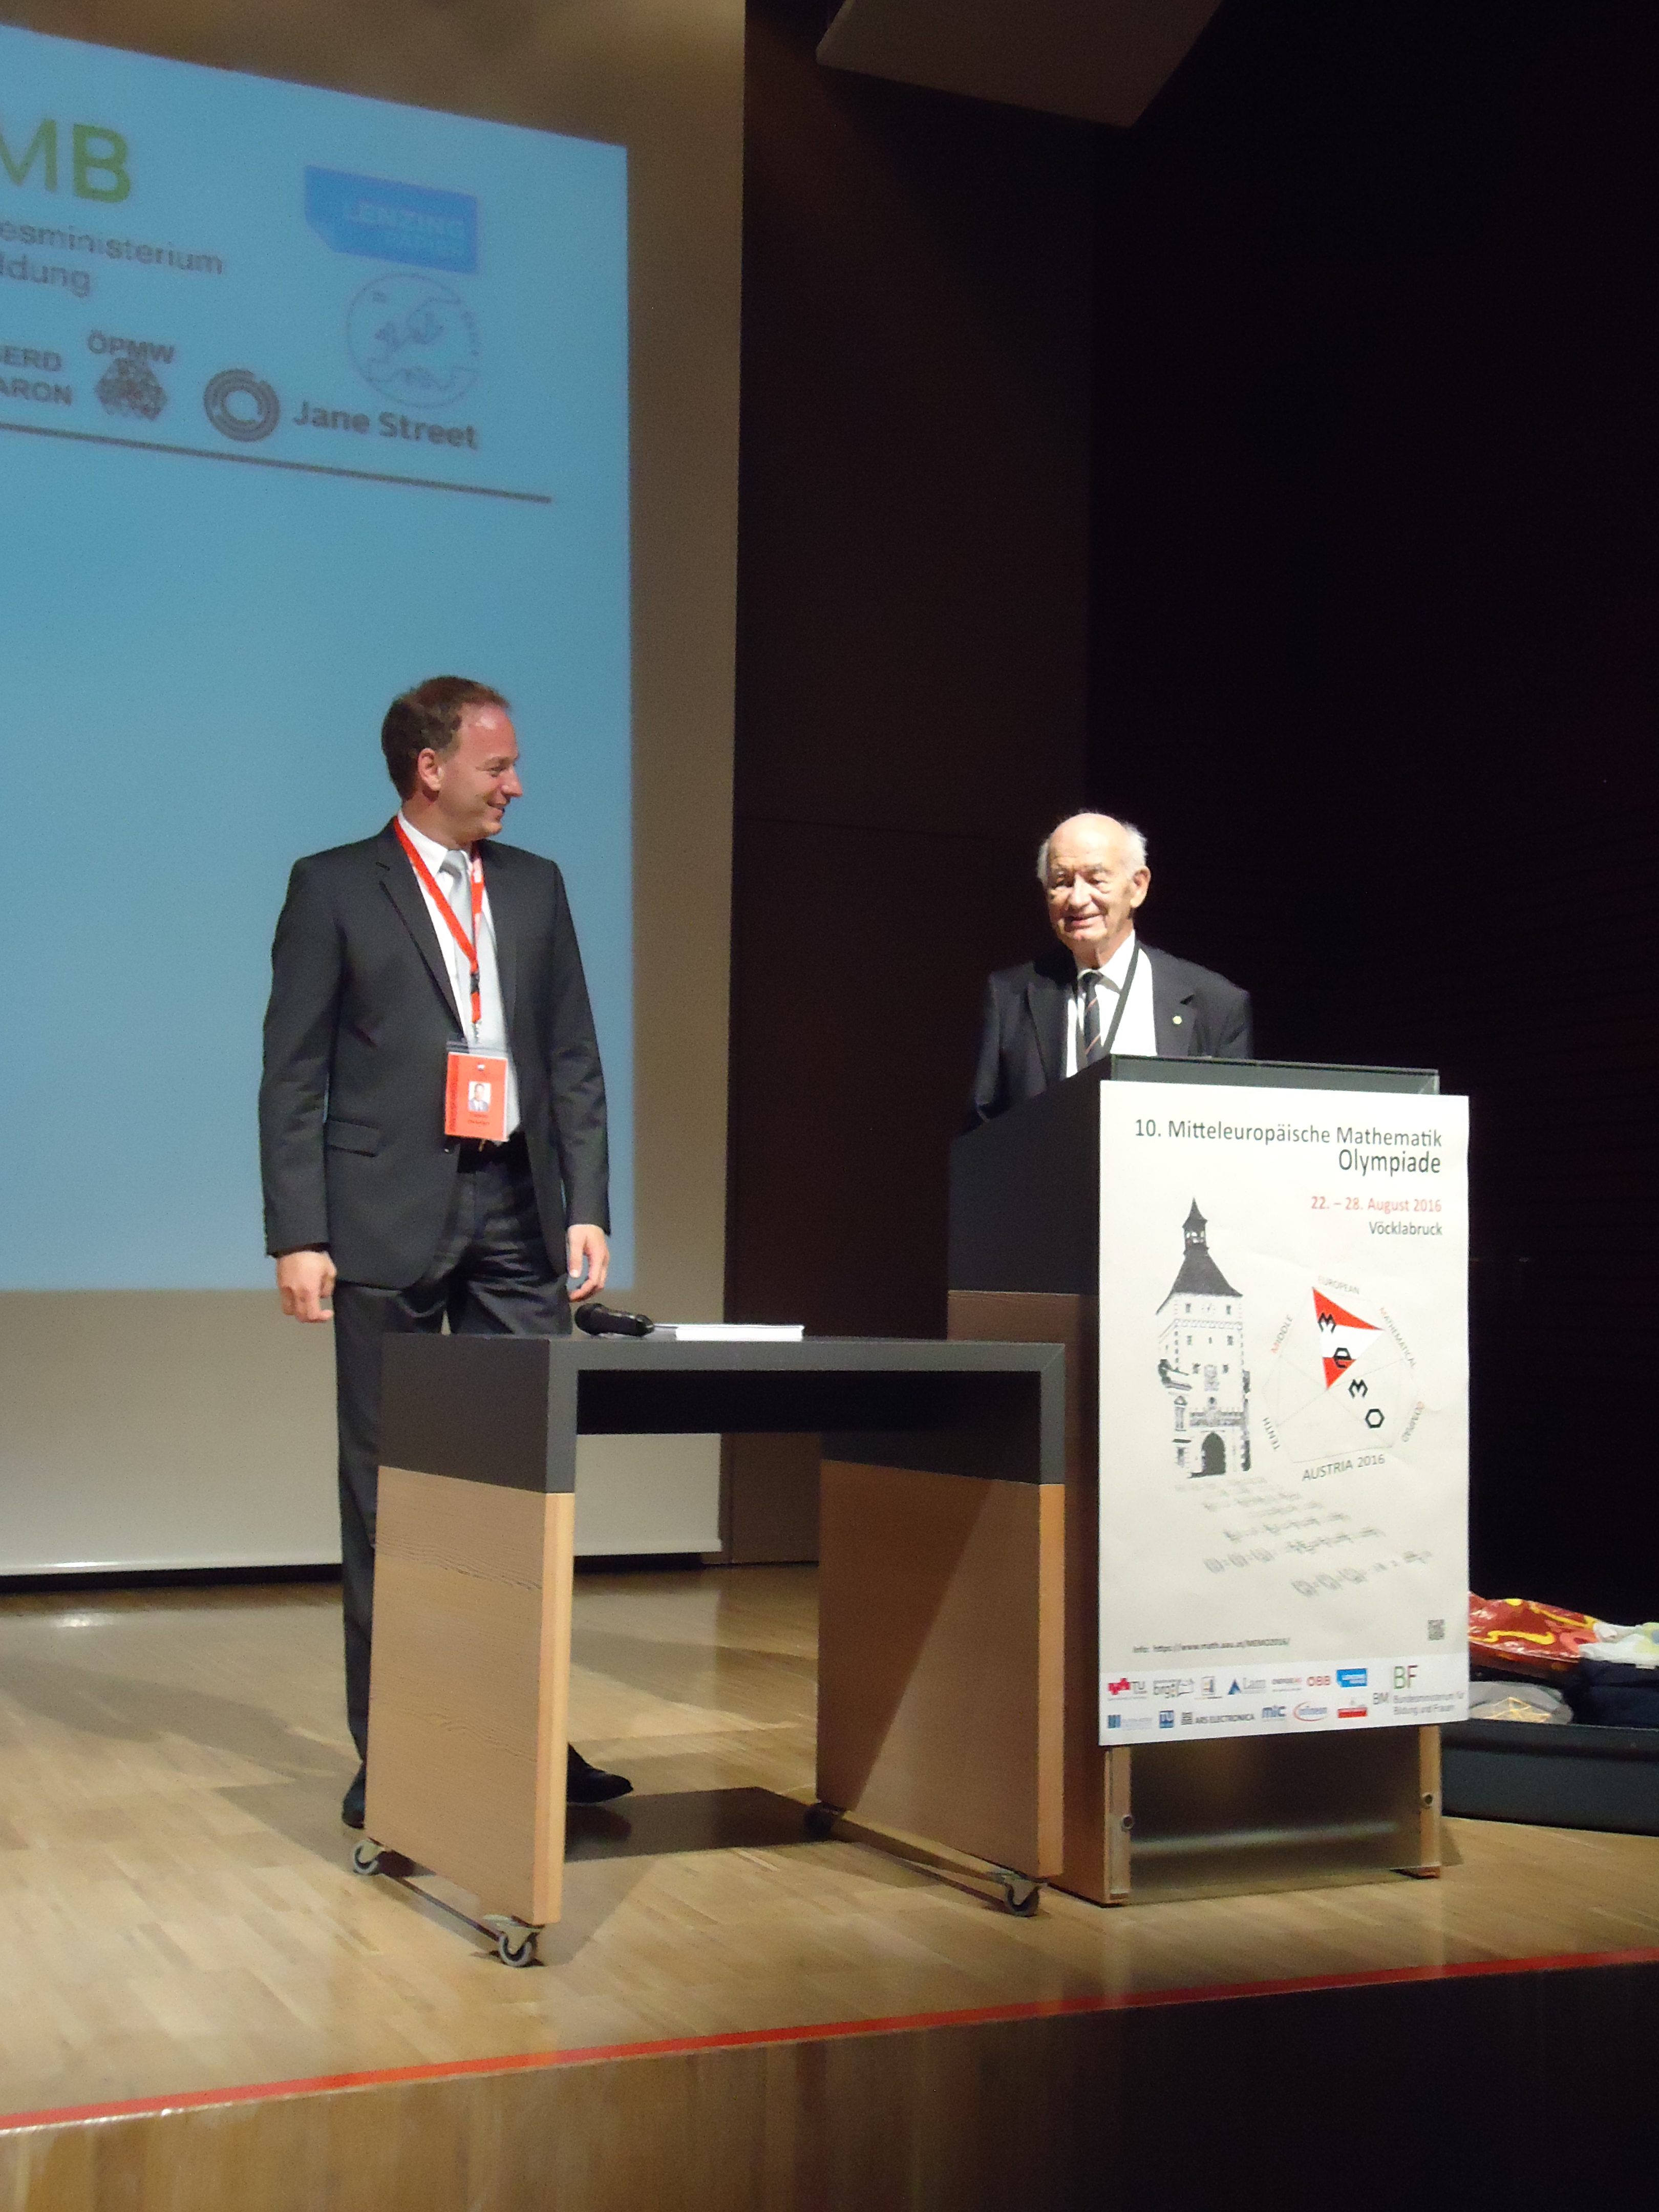 Univ.-Prof. Dr. Clemens Heuberger and Univ.-Prof. i.R. Dr. Gerd Baron